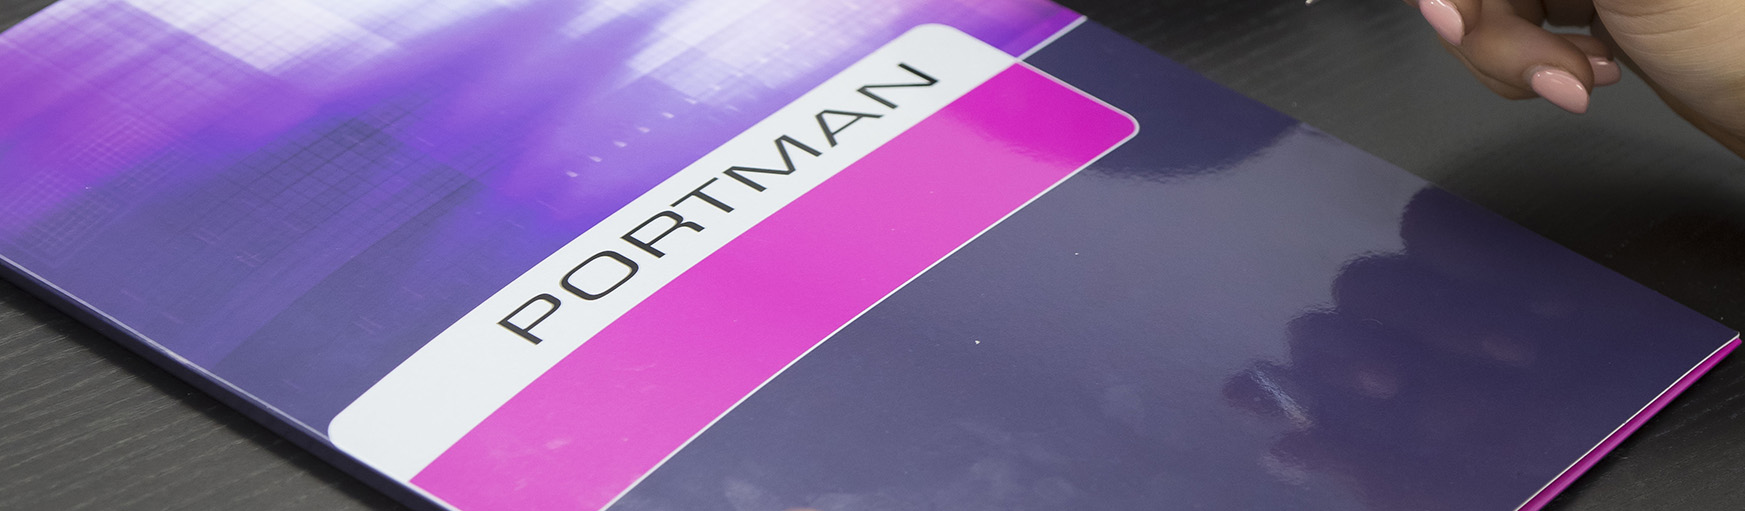 Portman integrated phone banner